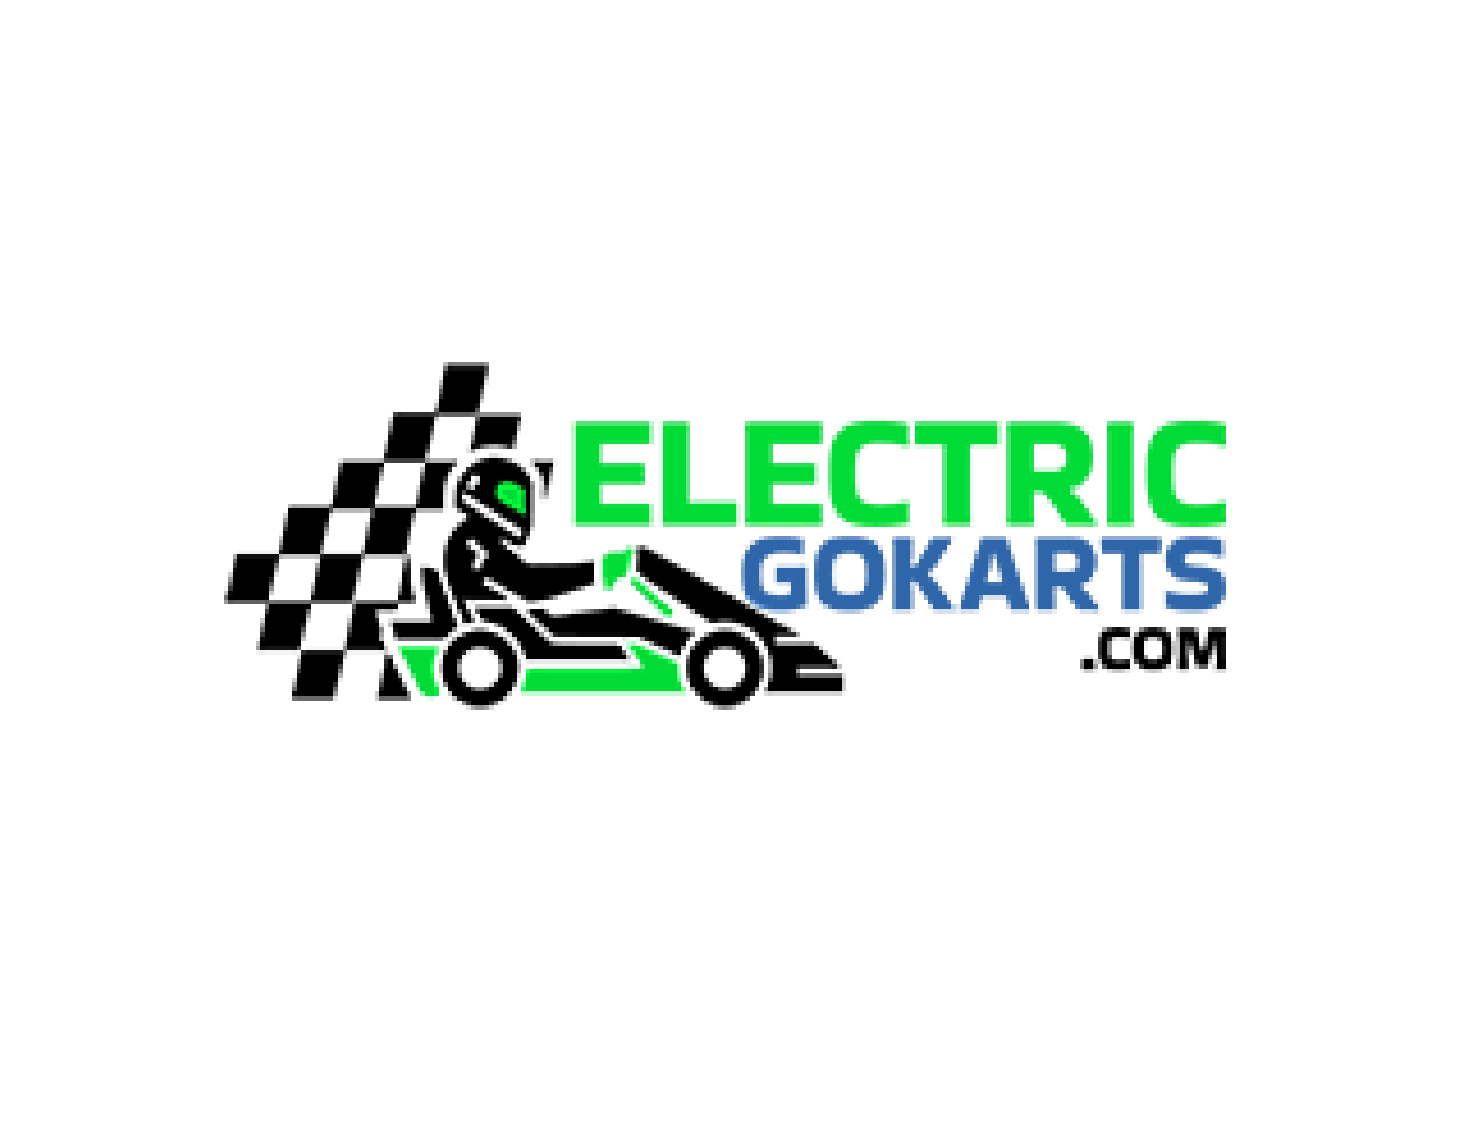 Electric Gokarts